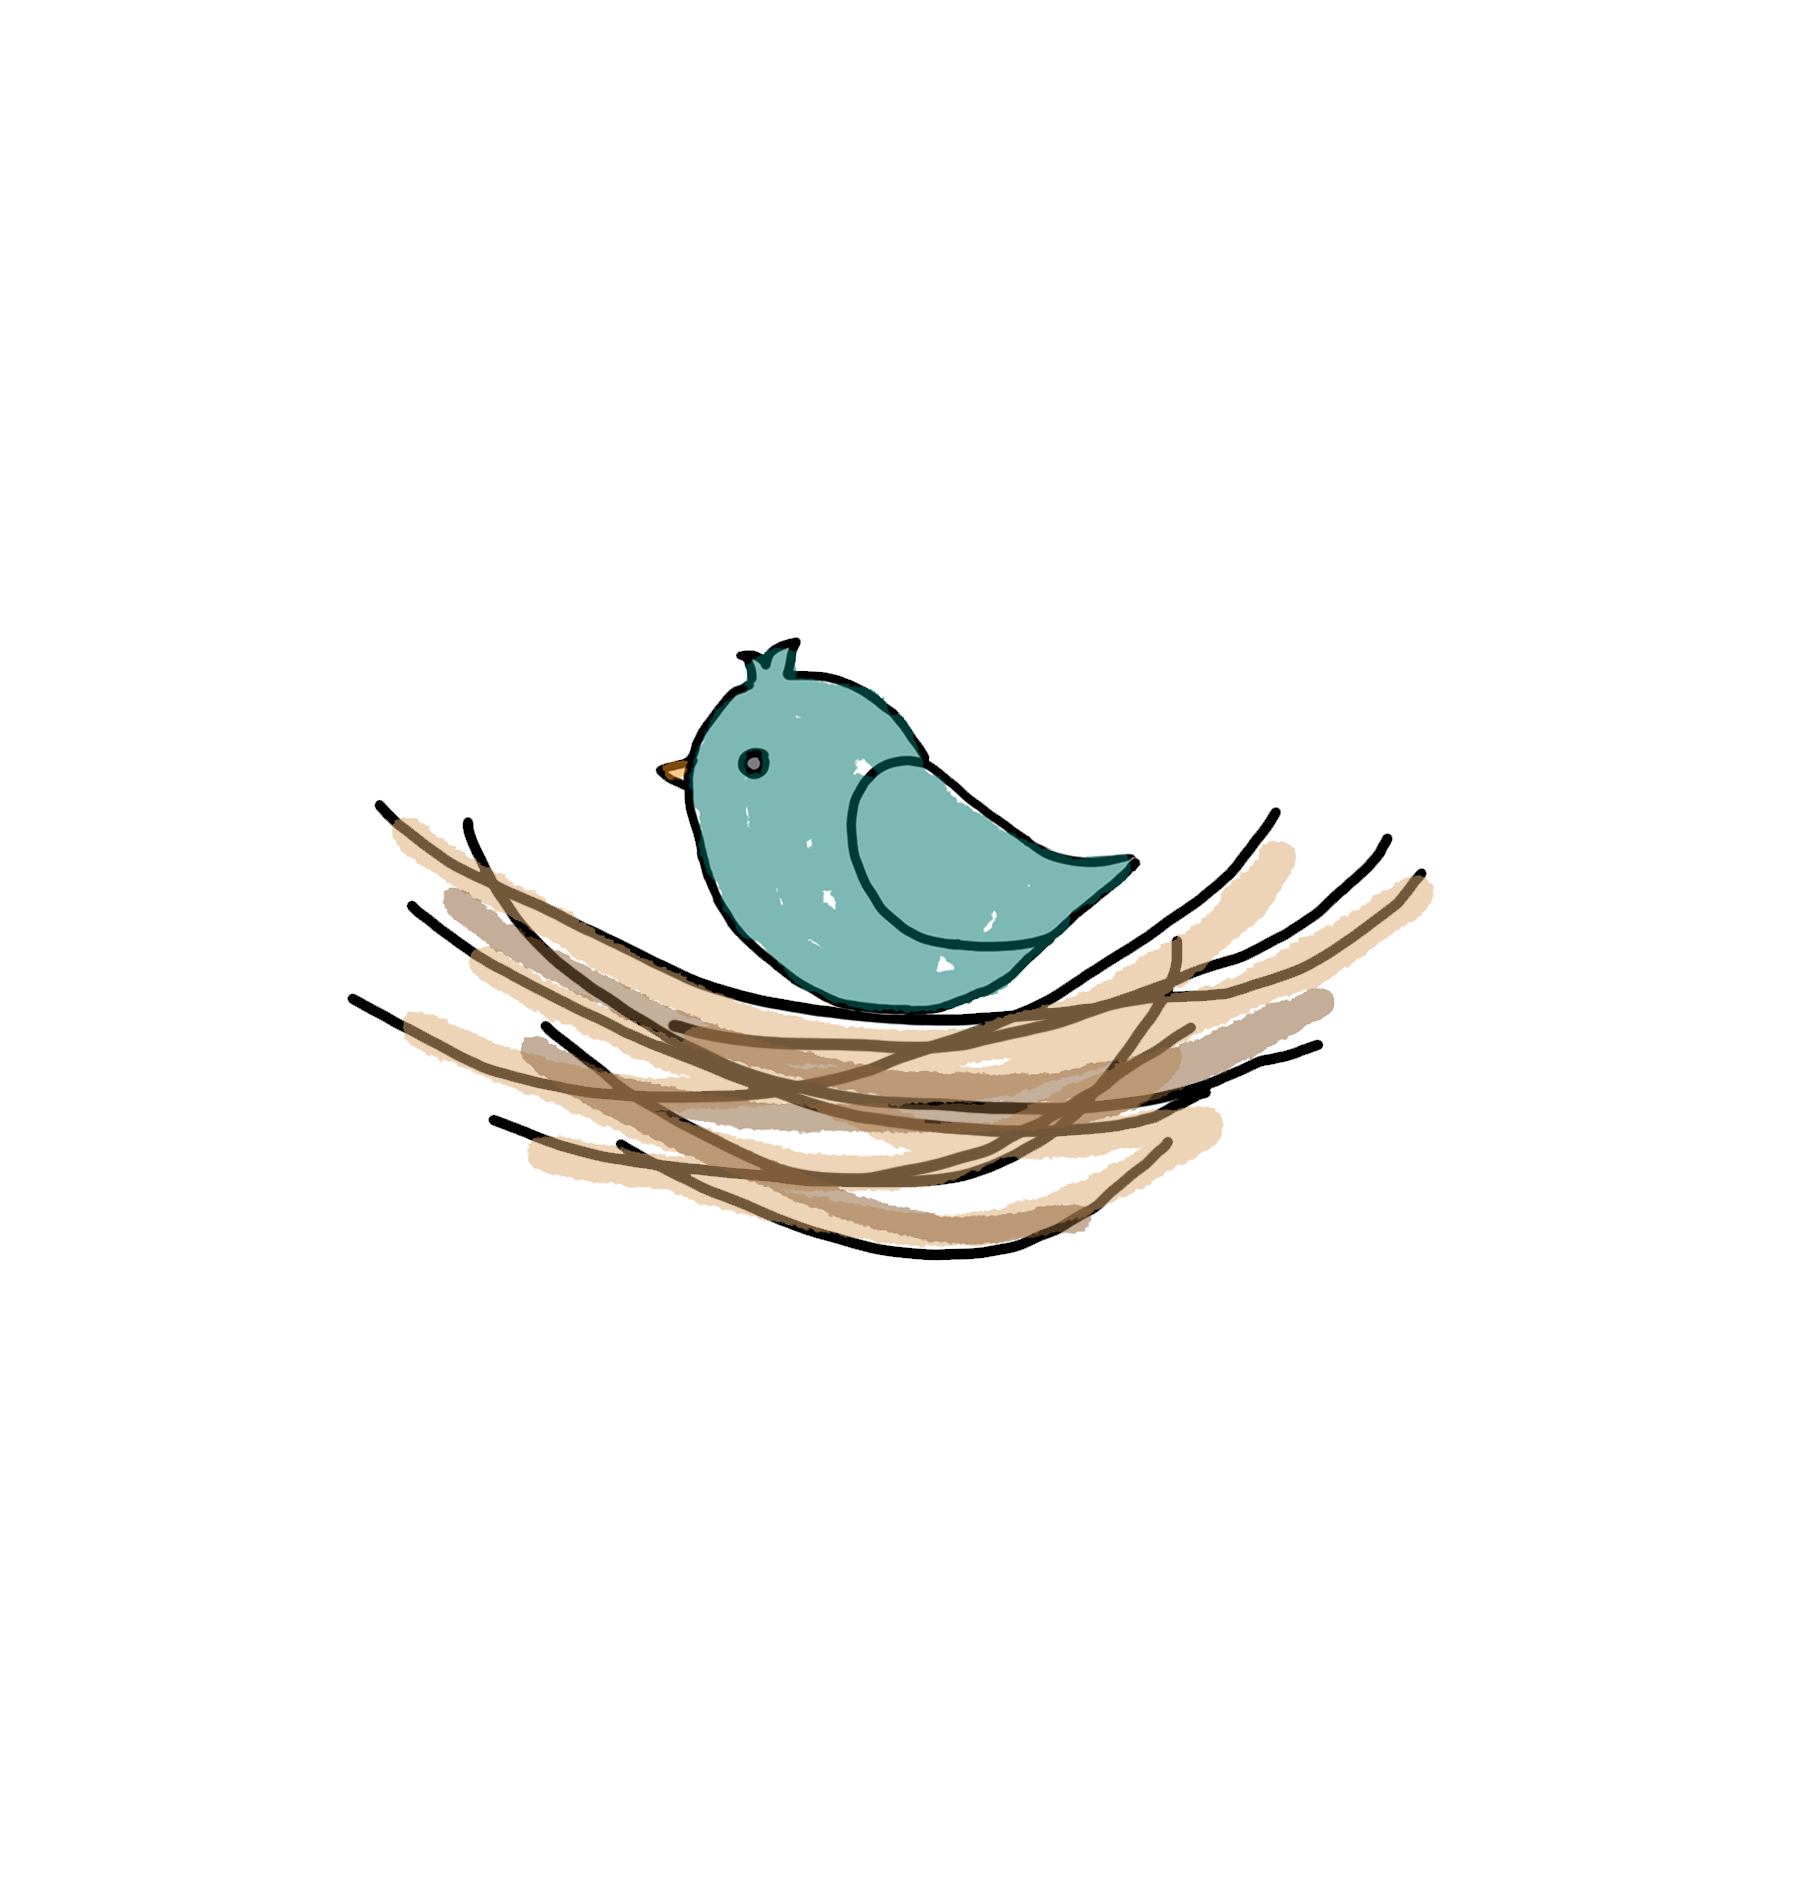 Bird's Nest Boards